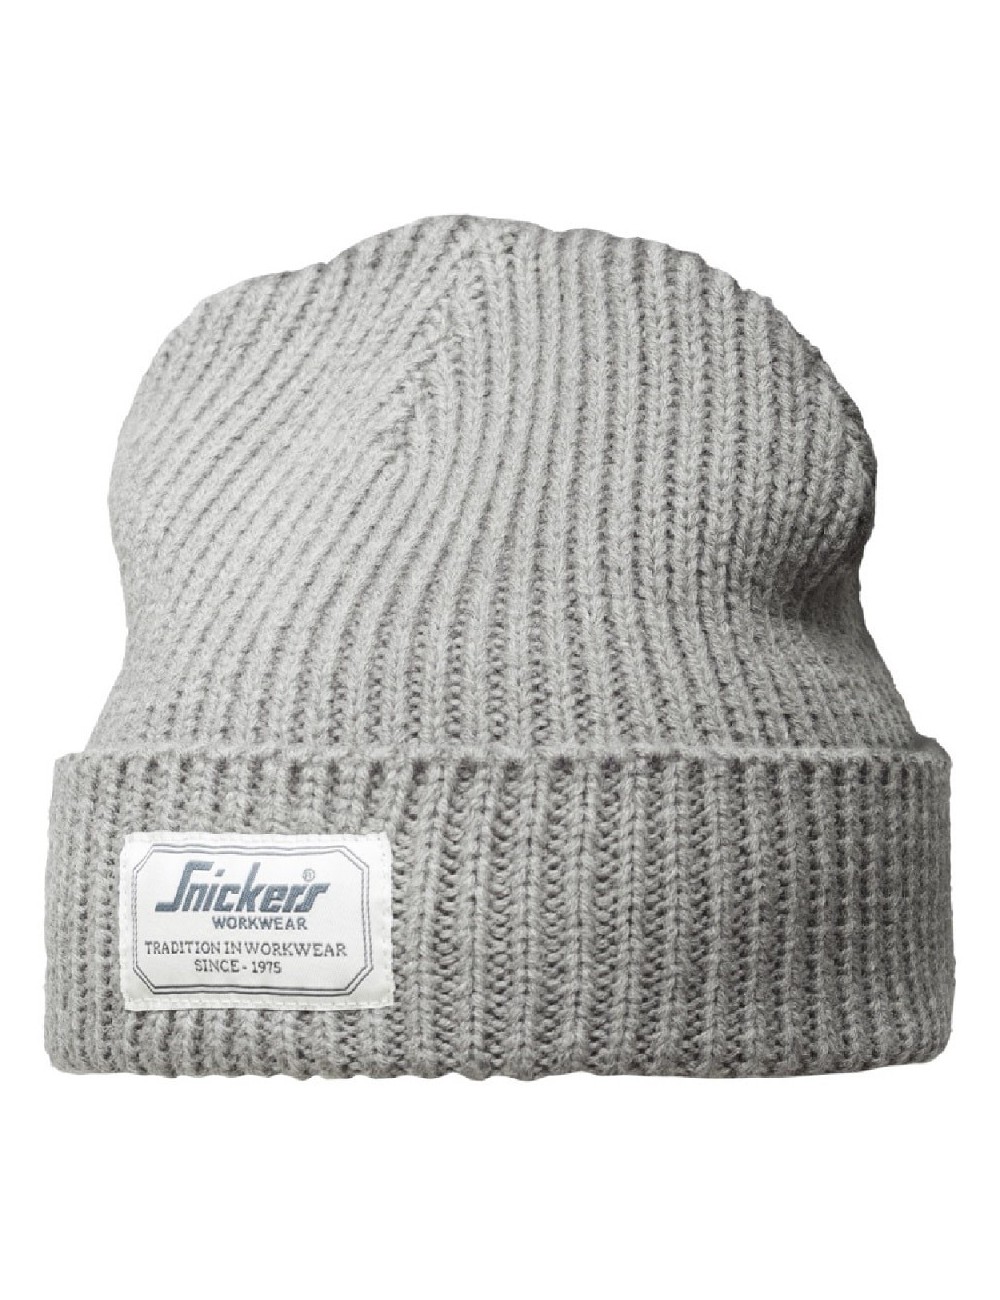 Snickers 9023 Fisherman winter hat